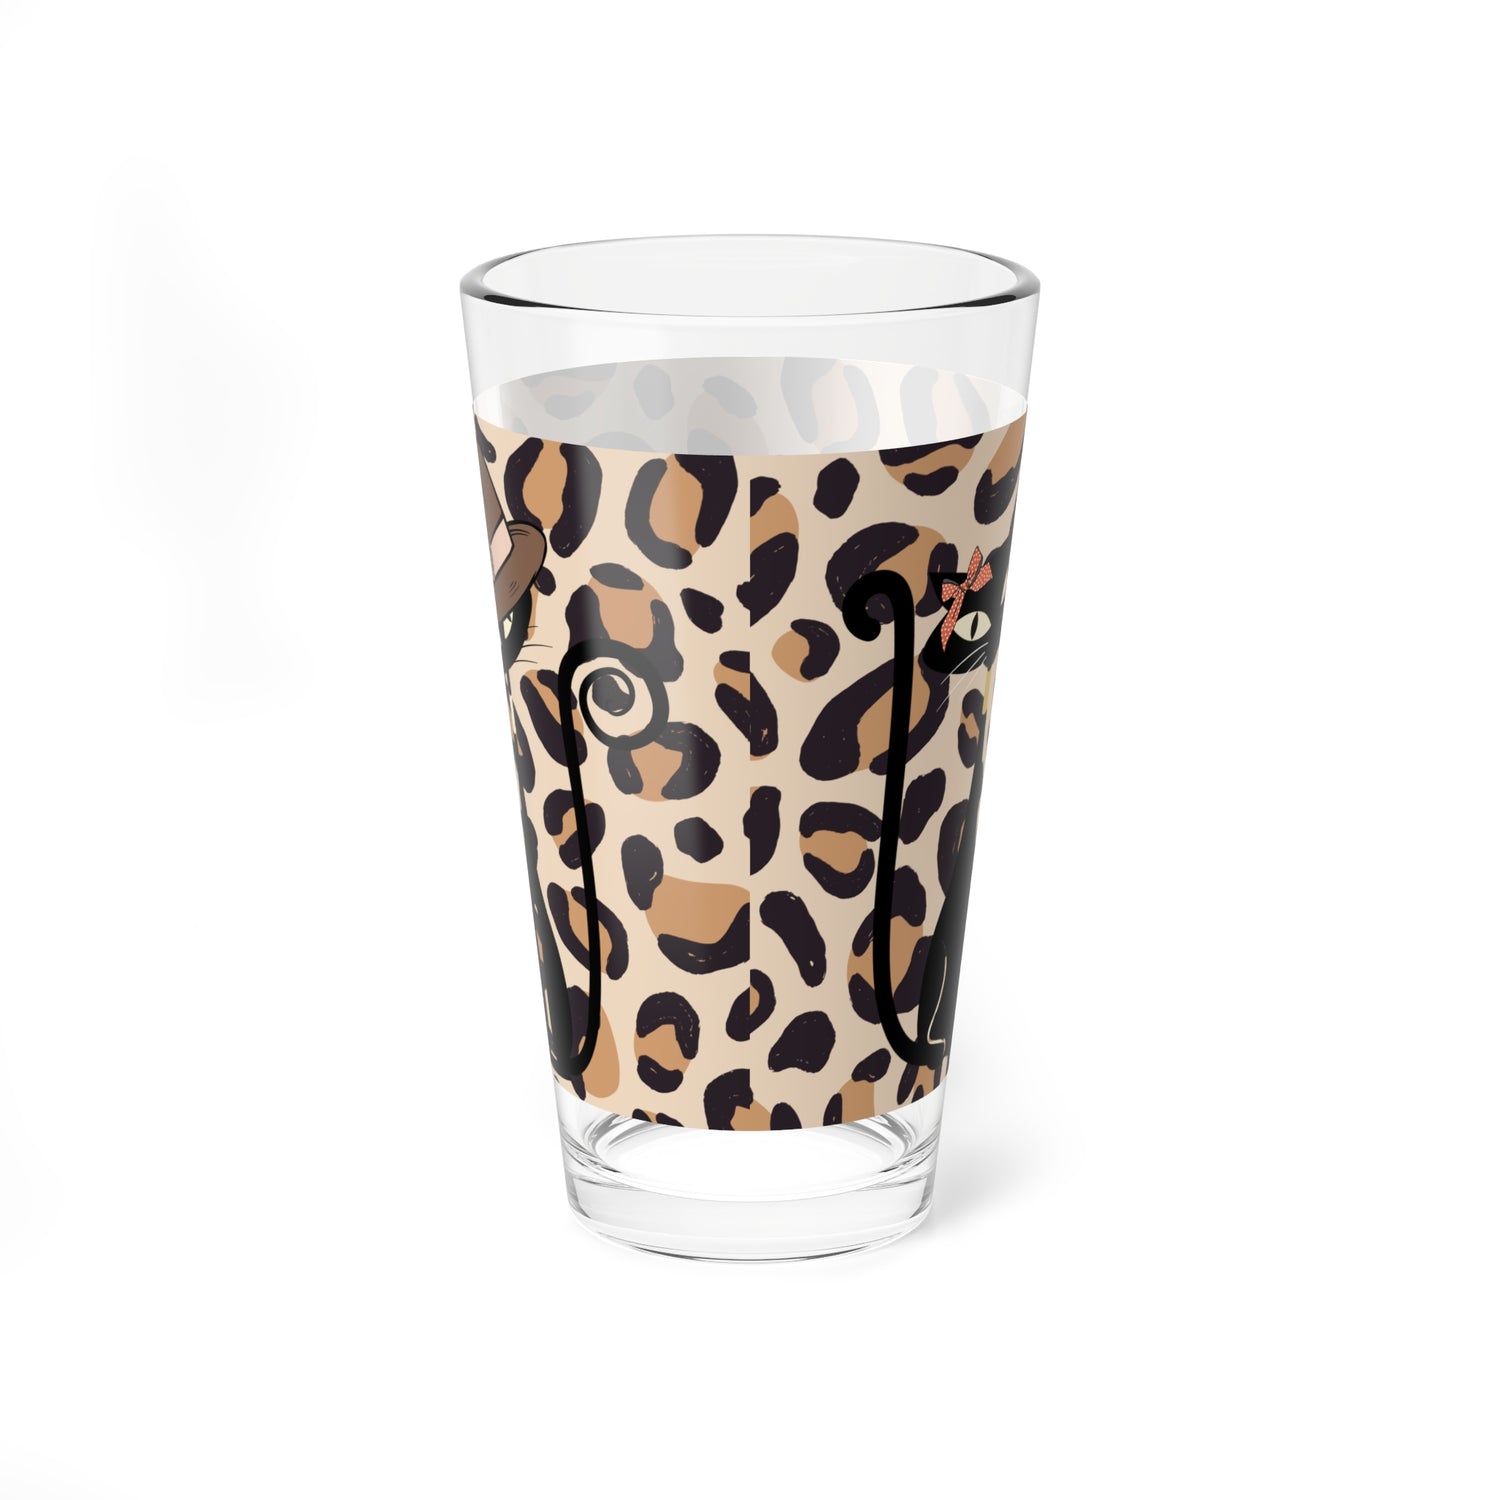 Atomic Cats 50s Mid Century Modern Barware, Kitschy Fun Leopard Print Glass